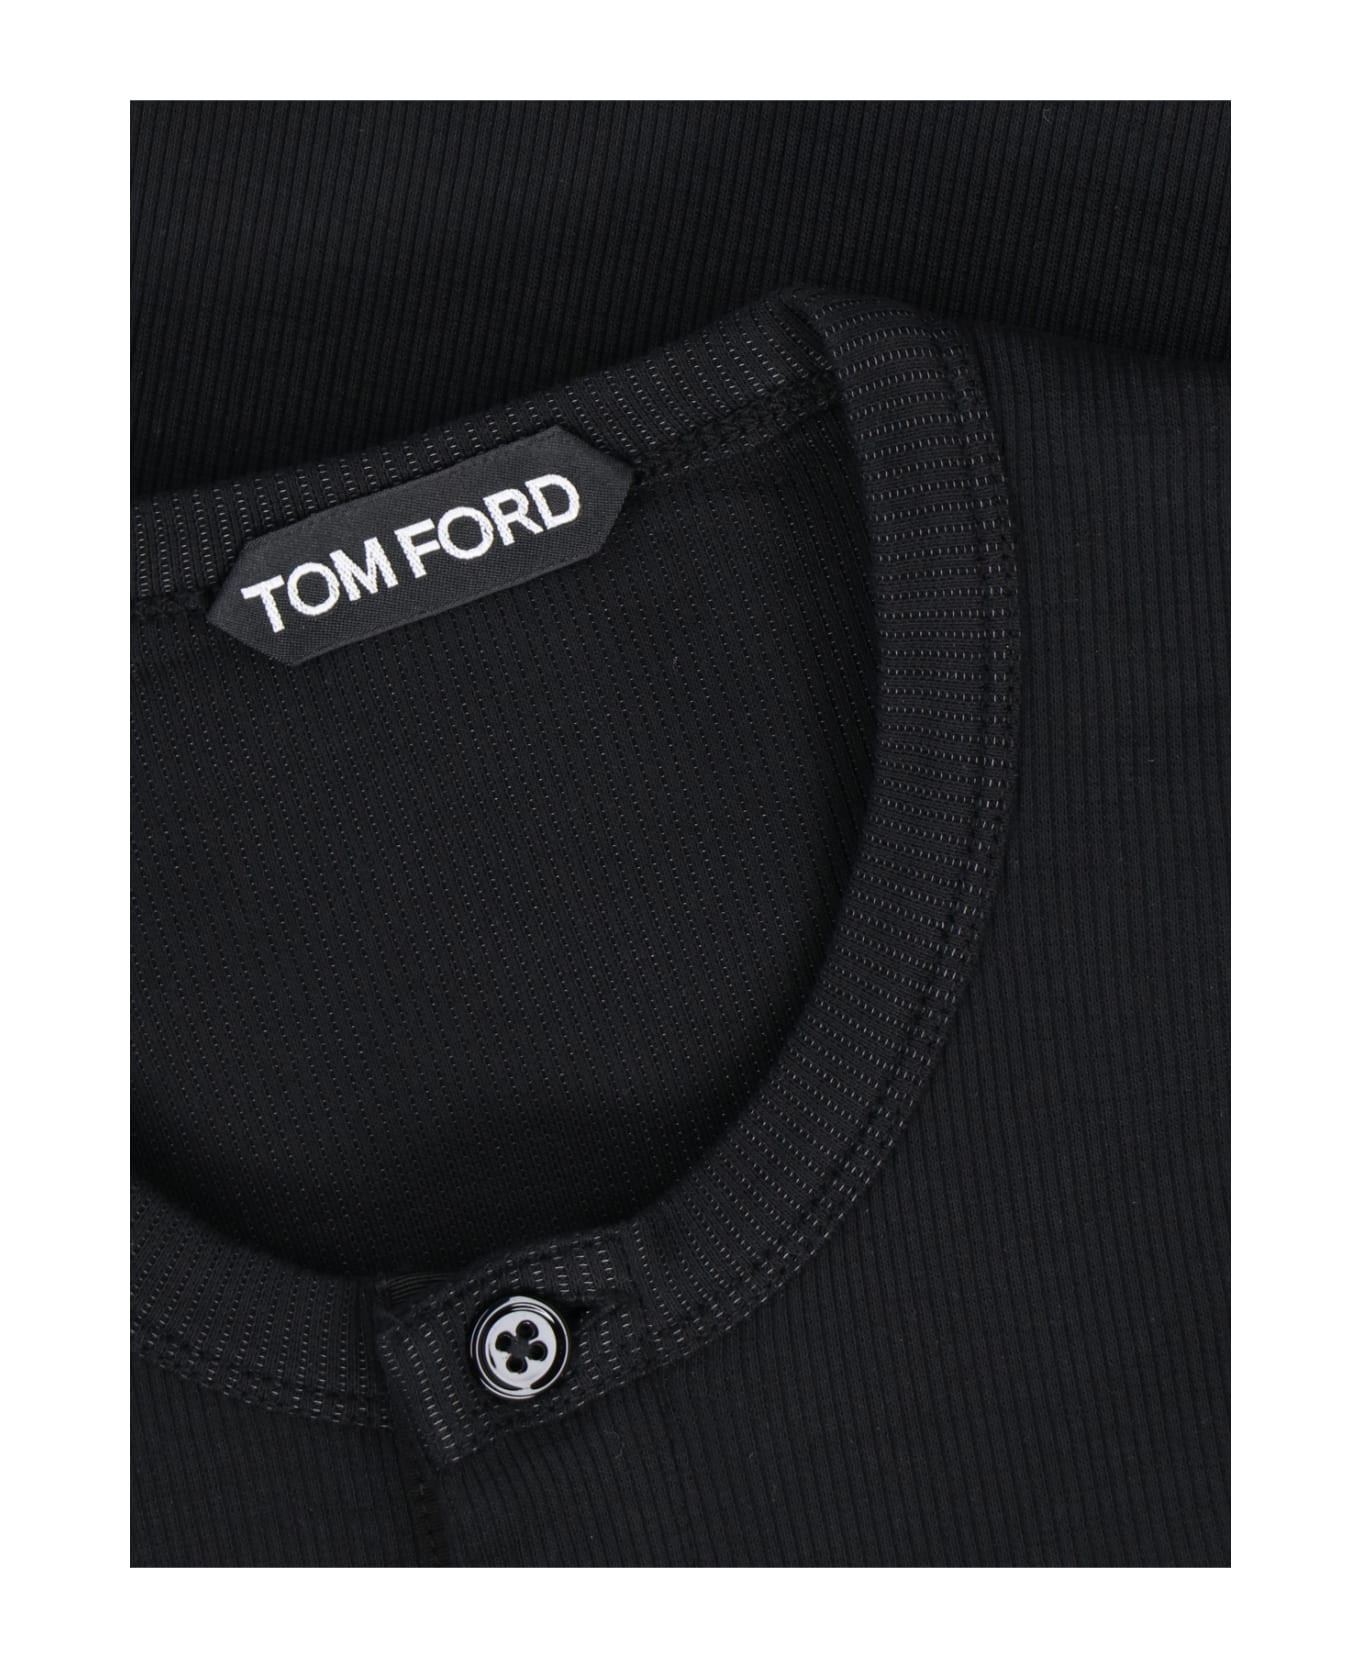 Tom Ford 'henley' T-shirt - Black  